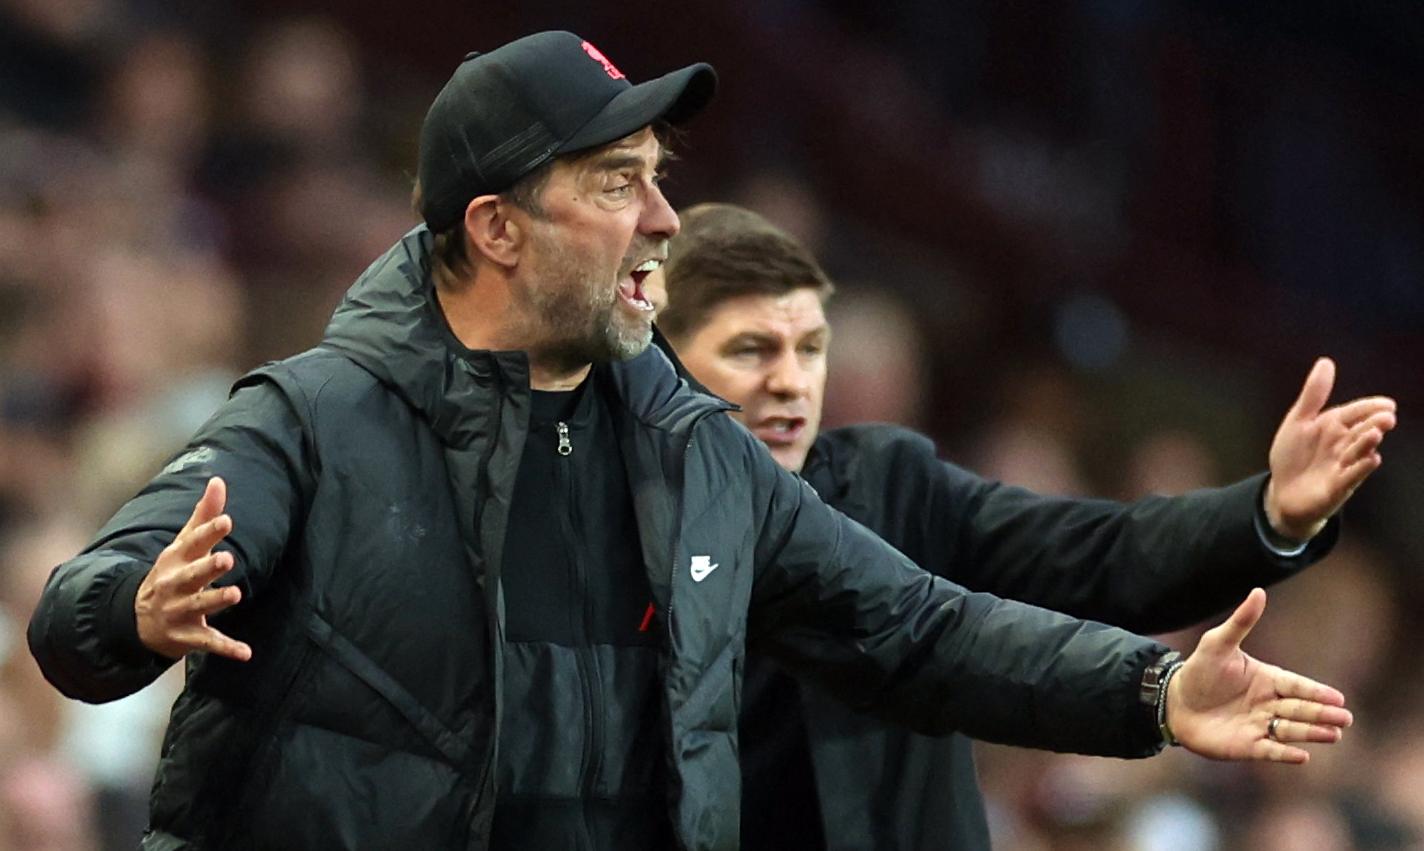 DUELL MED LEGENDEN: Jürgen Klopp med Aston Villa-manager og Liverpool-legende Steven Gerrard på sidelinjen. 